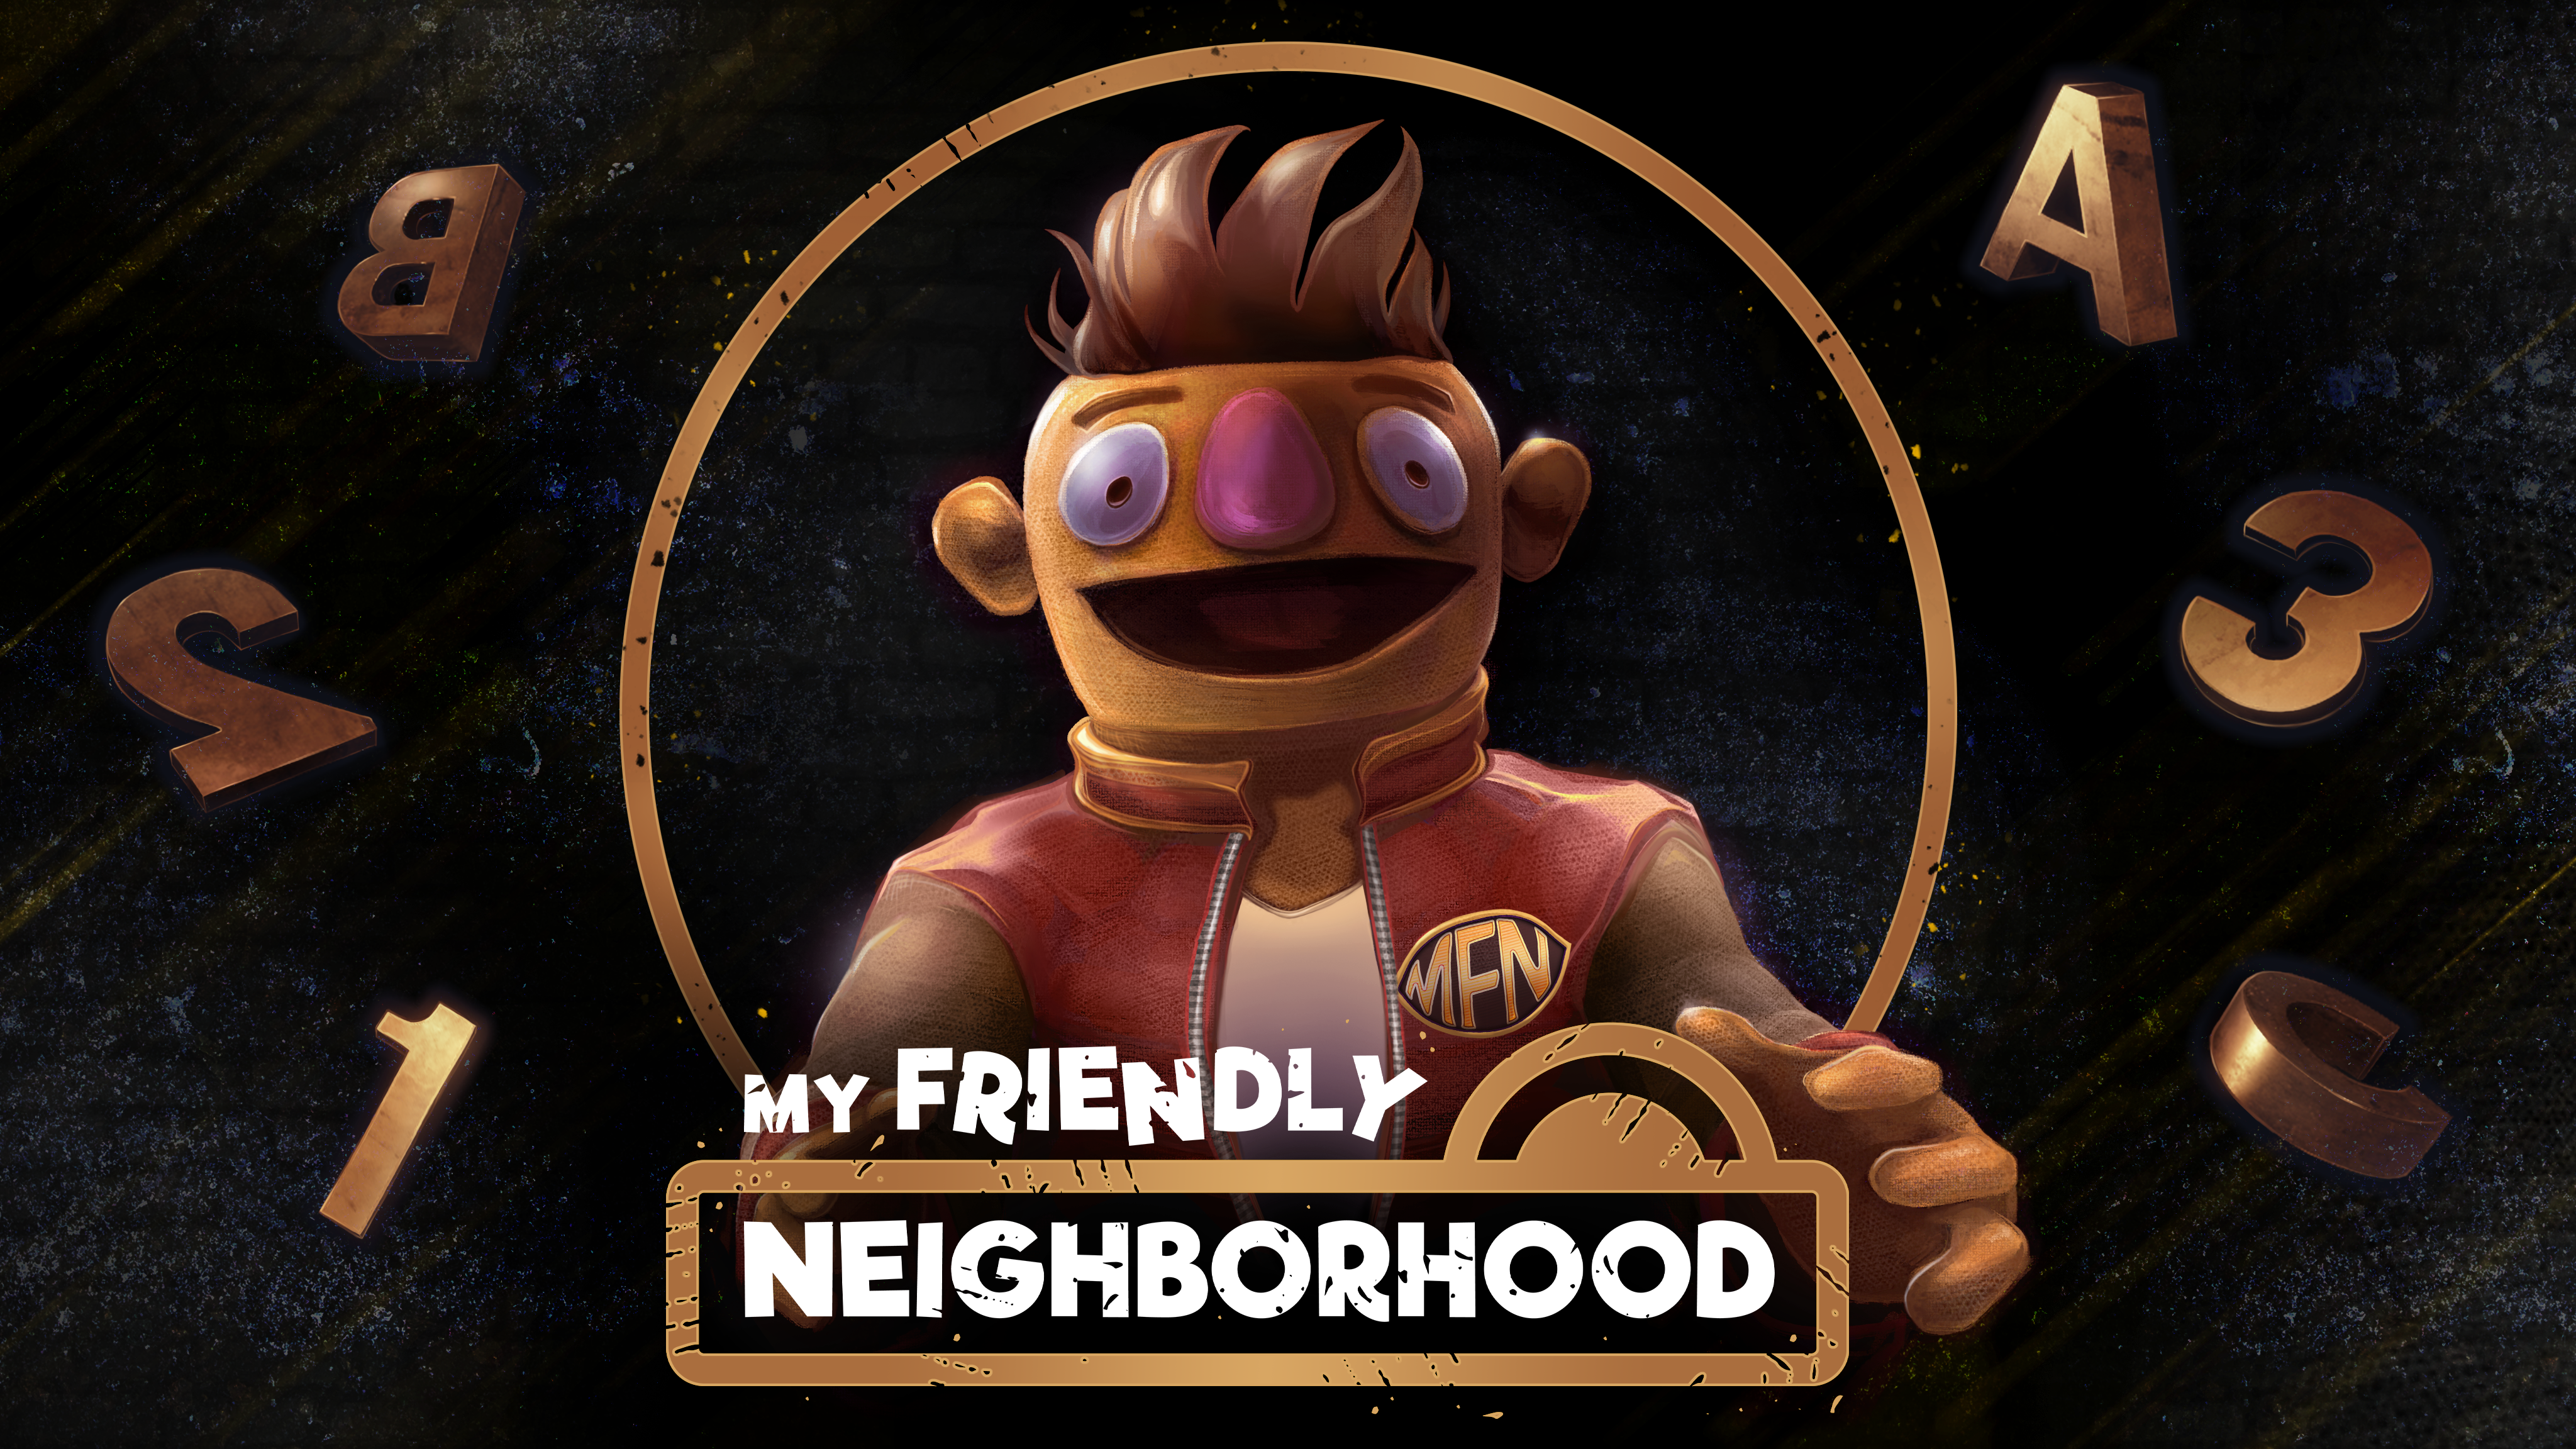 No my friend. My friendly neighborhood игра. My friendly neighborhood логотип. Май френдли нейборхуд. My friendly neighborhood оружие.